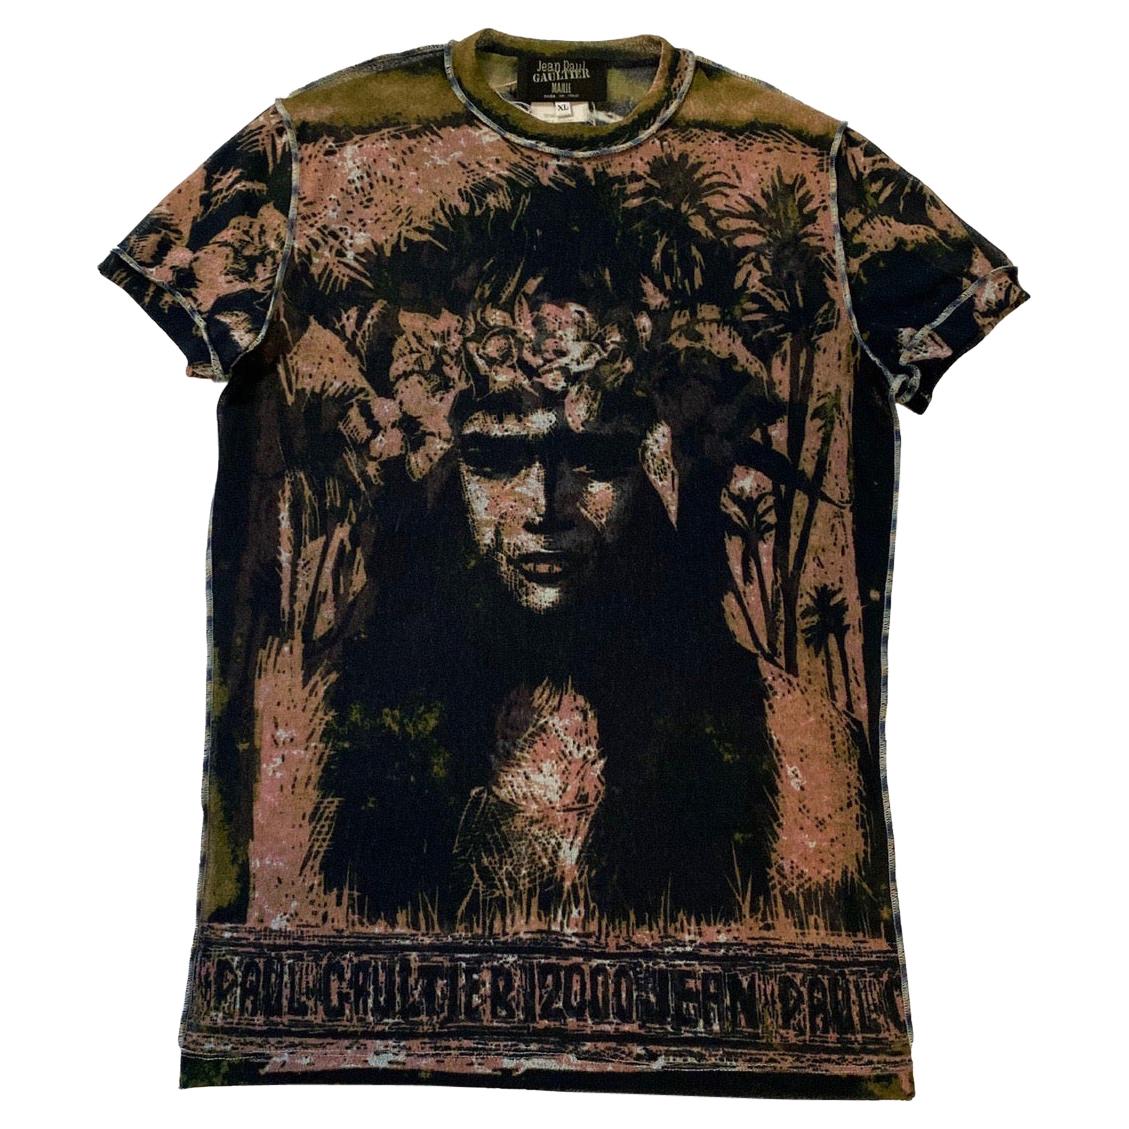 Jean Paul Gaultier S/S 2000 Polynesian print Mesh T-Shirt